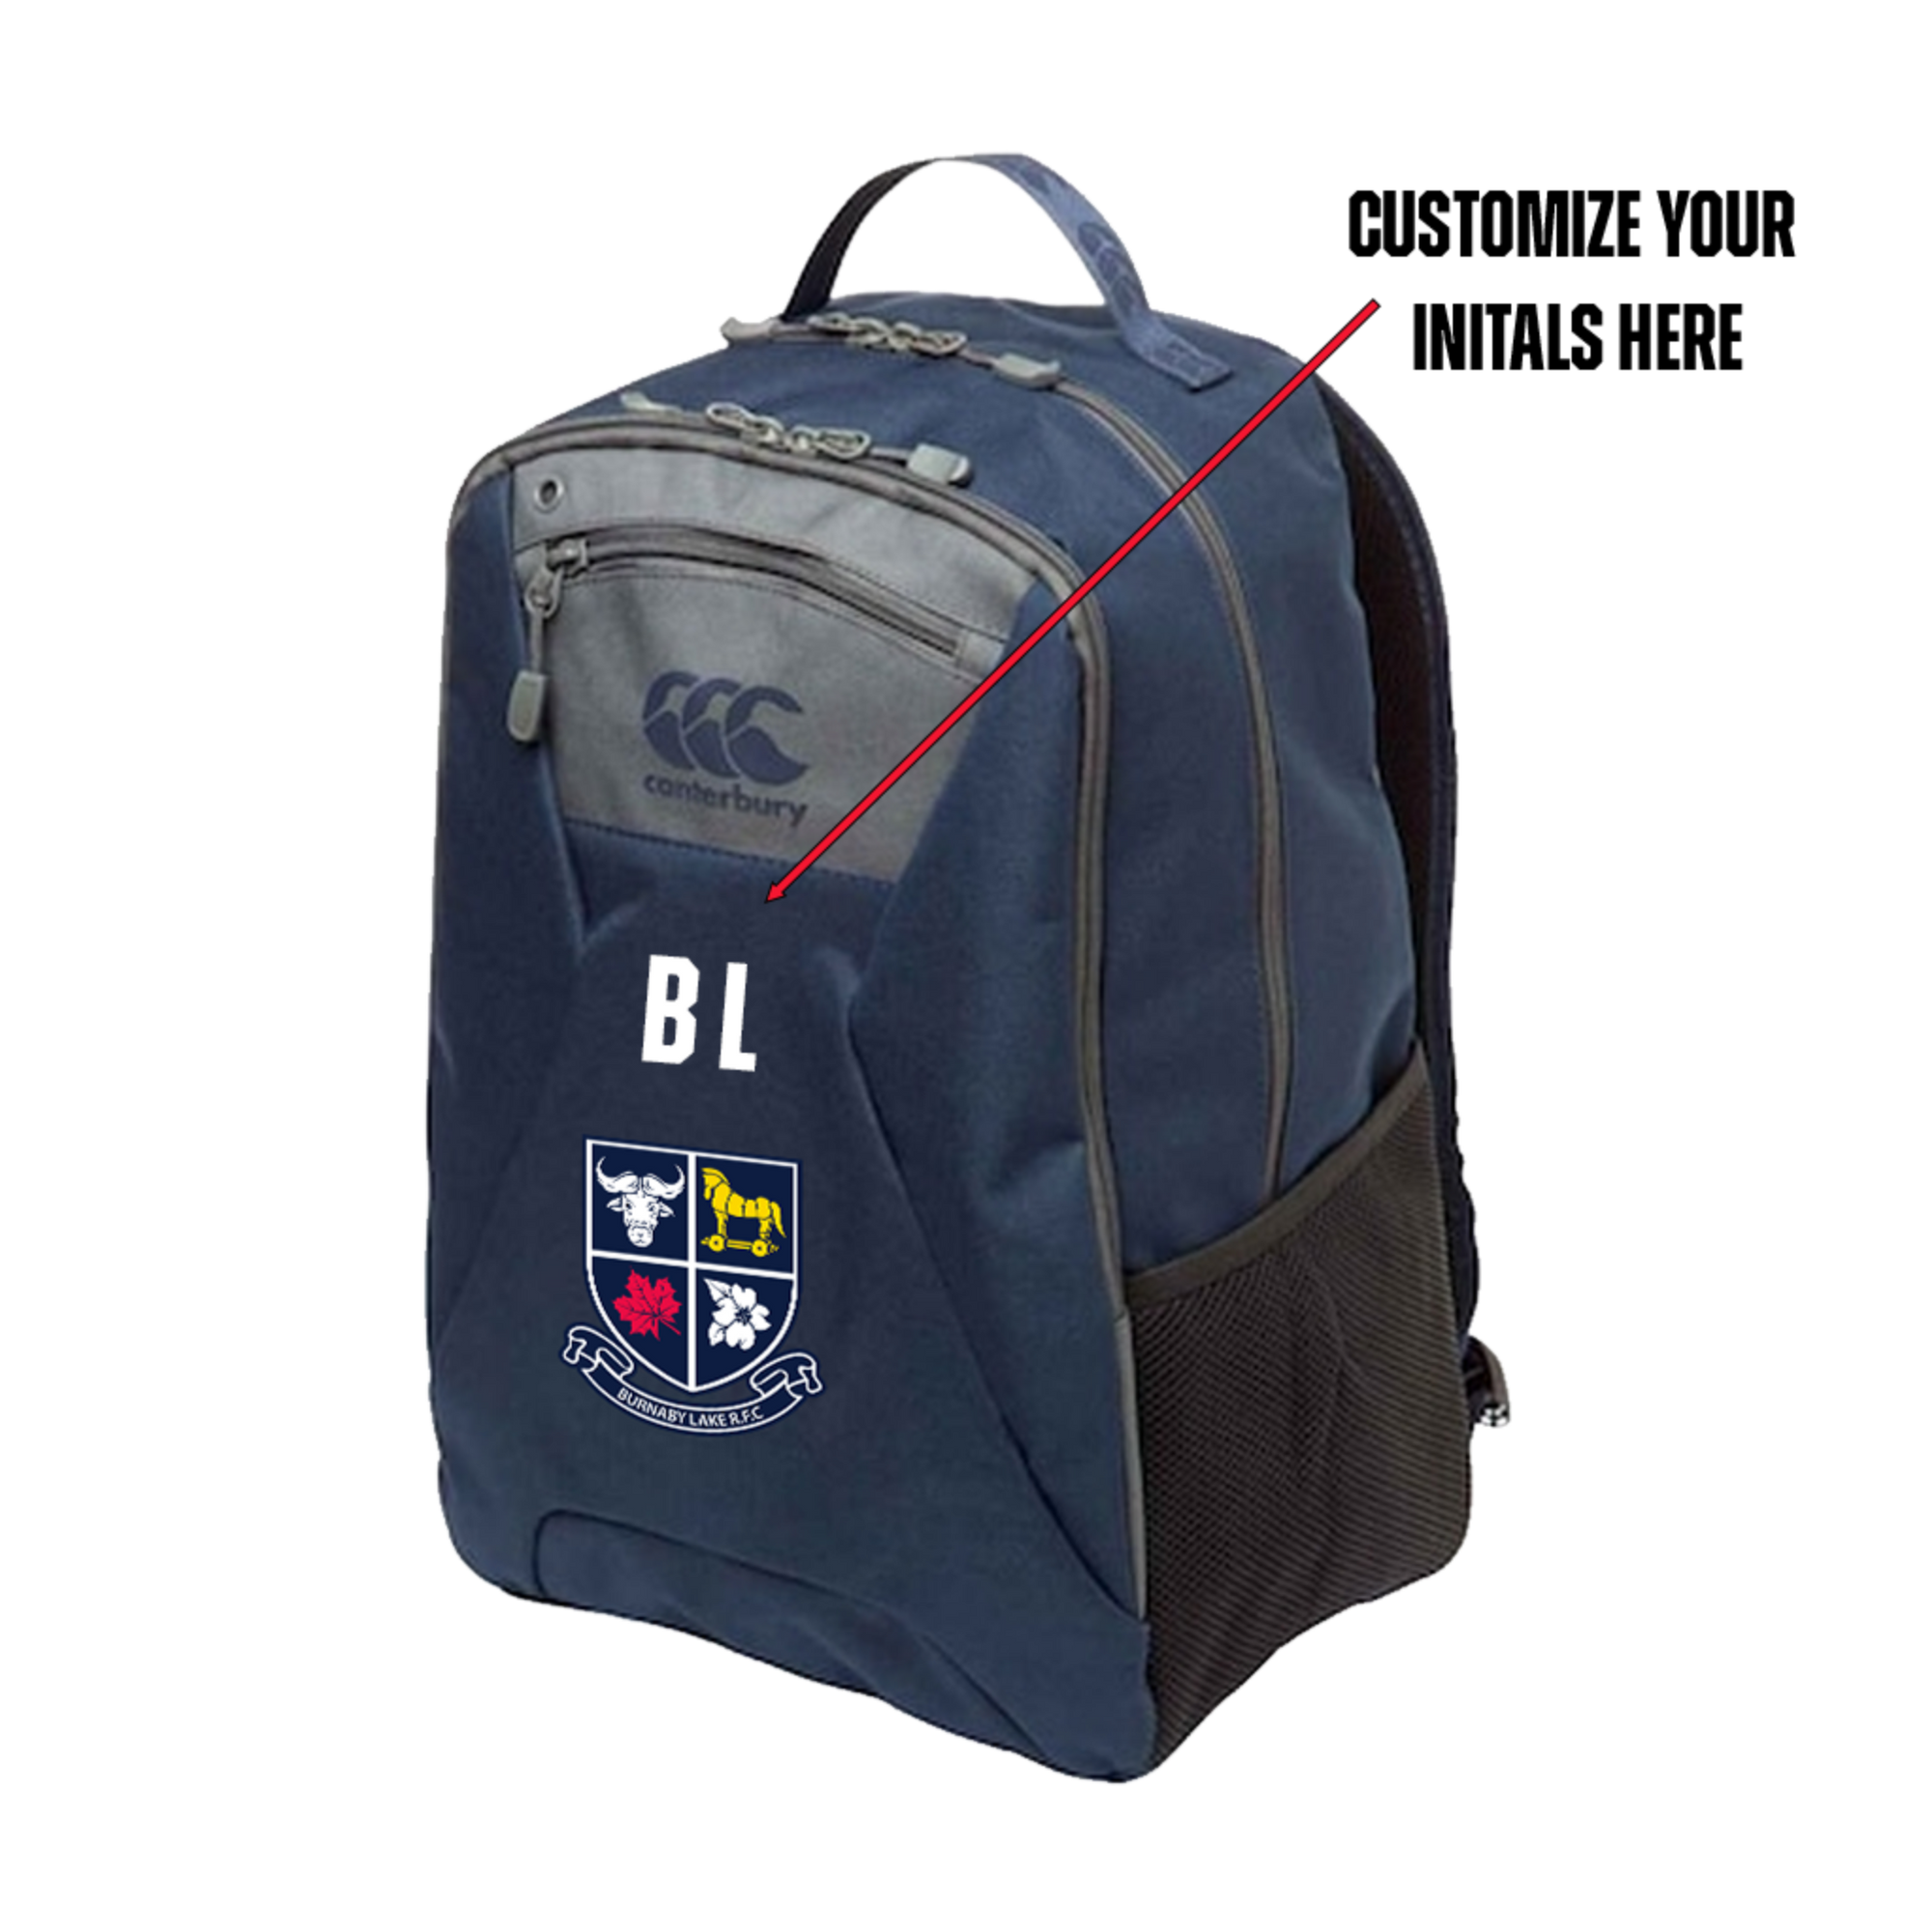 Burnaby Lake Canterbury CCC Classic Backpack - Navy- Customizable Initials